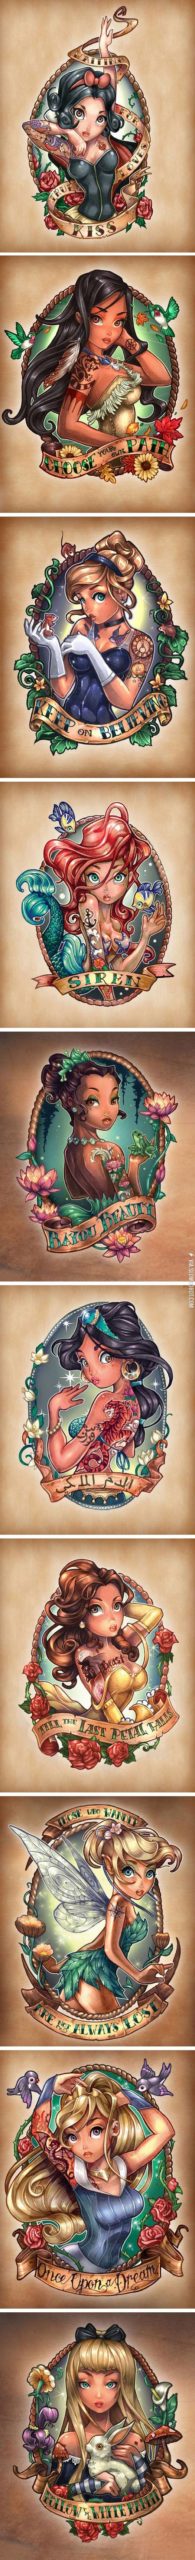 Disney+princesses+as+pin-up+girls.